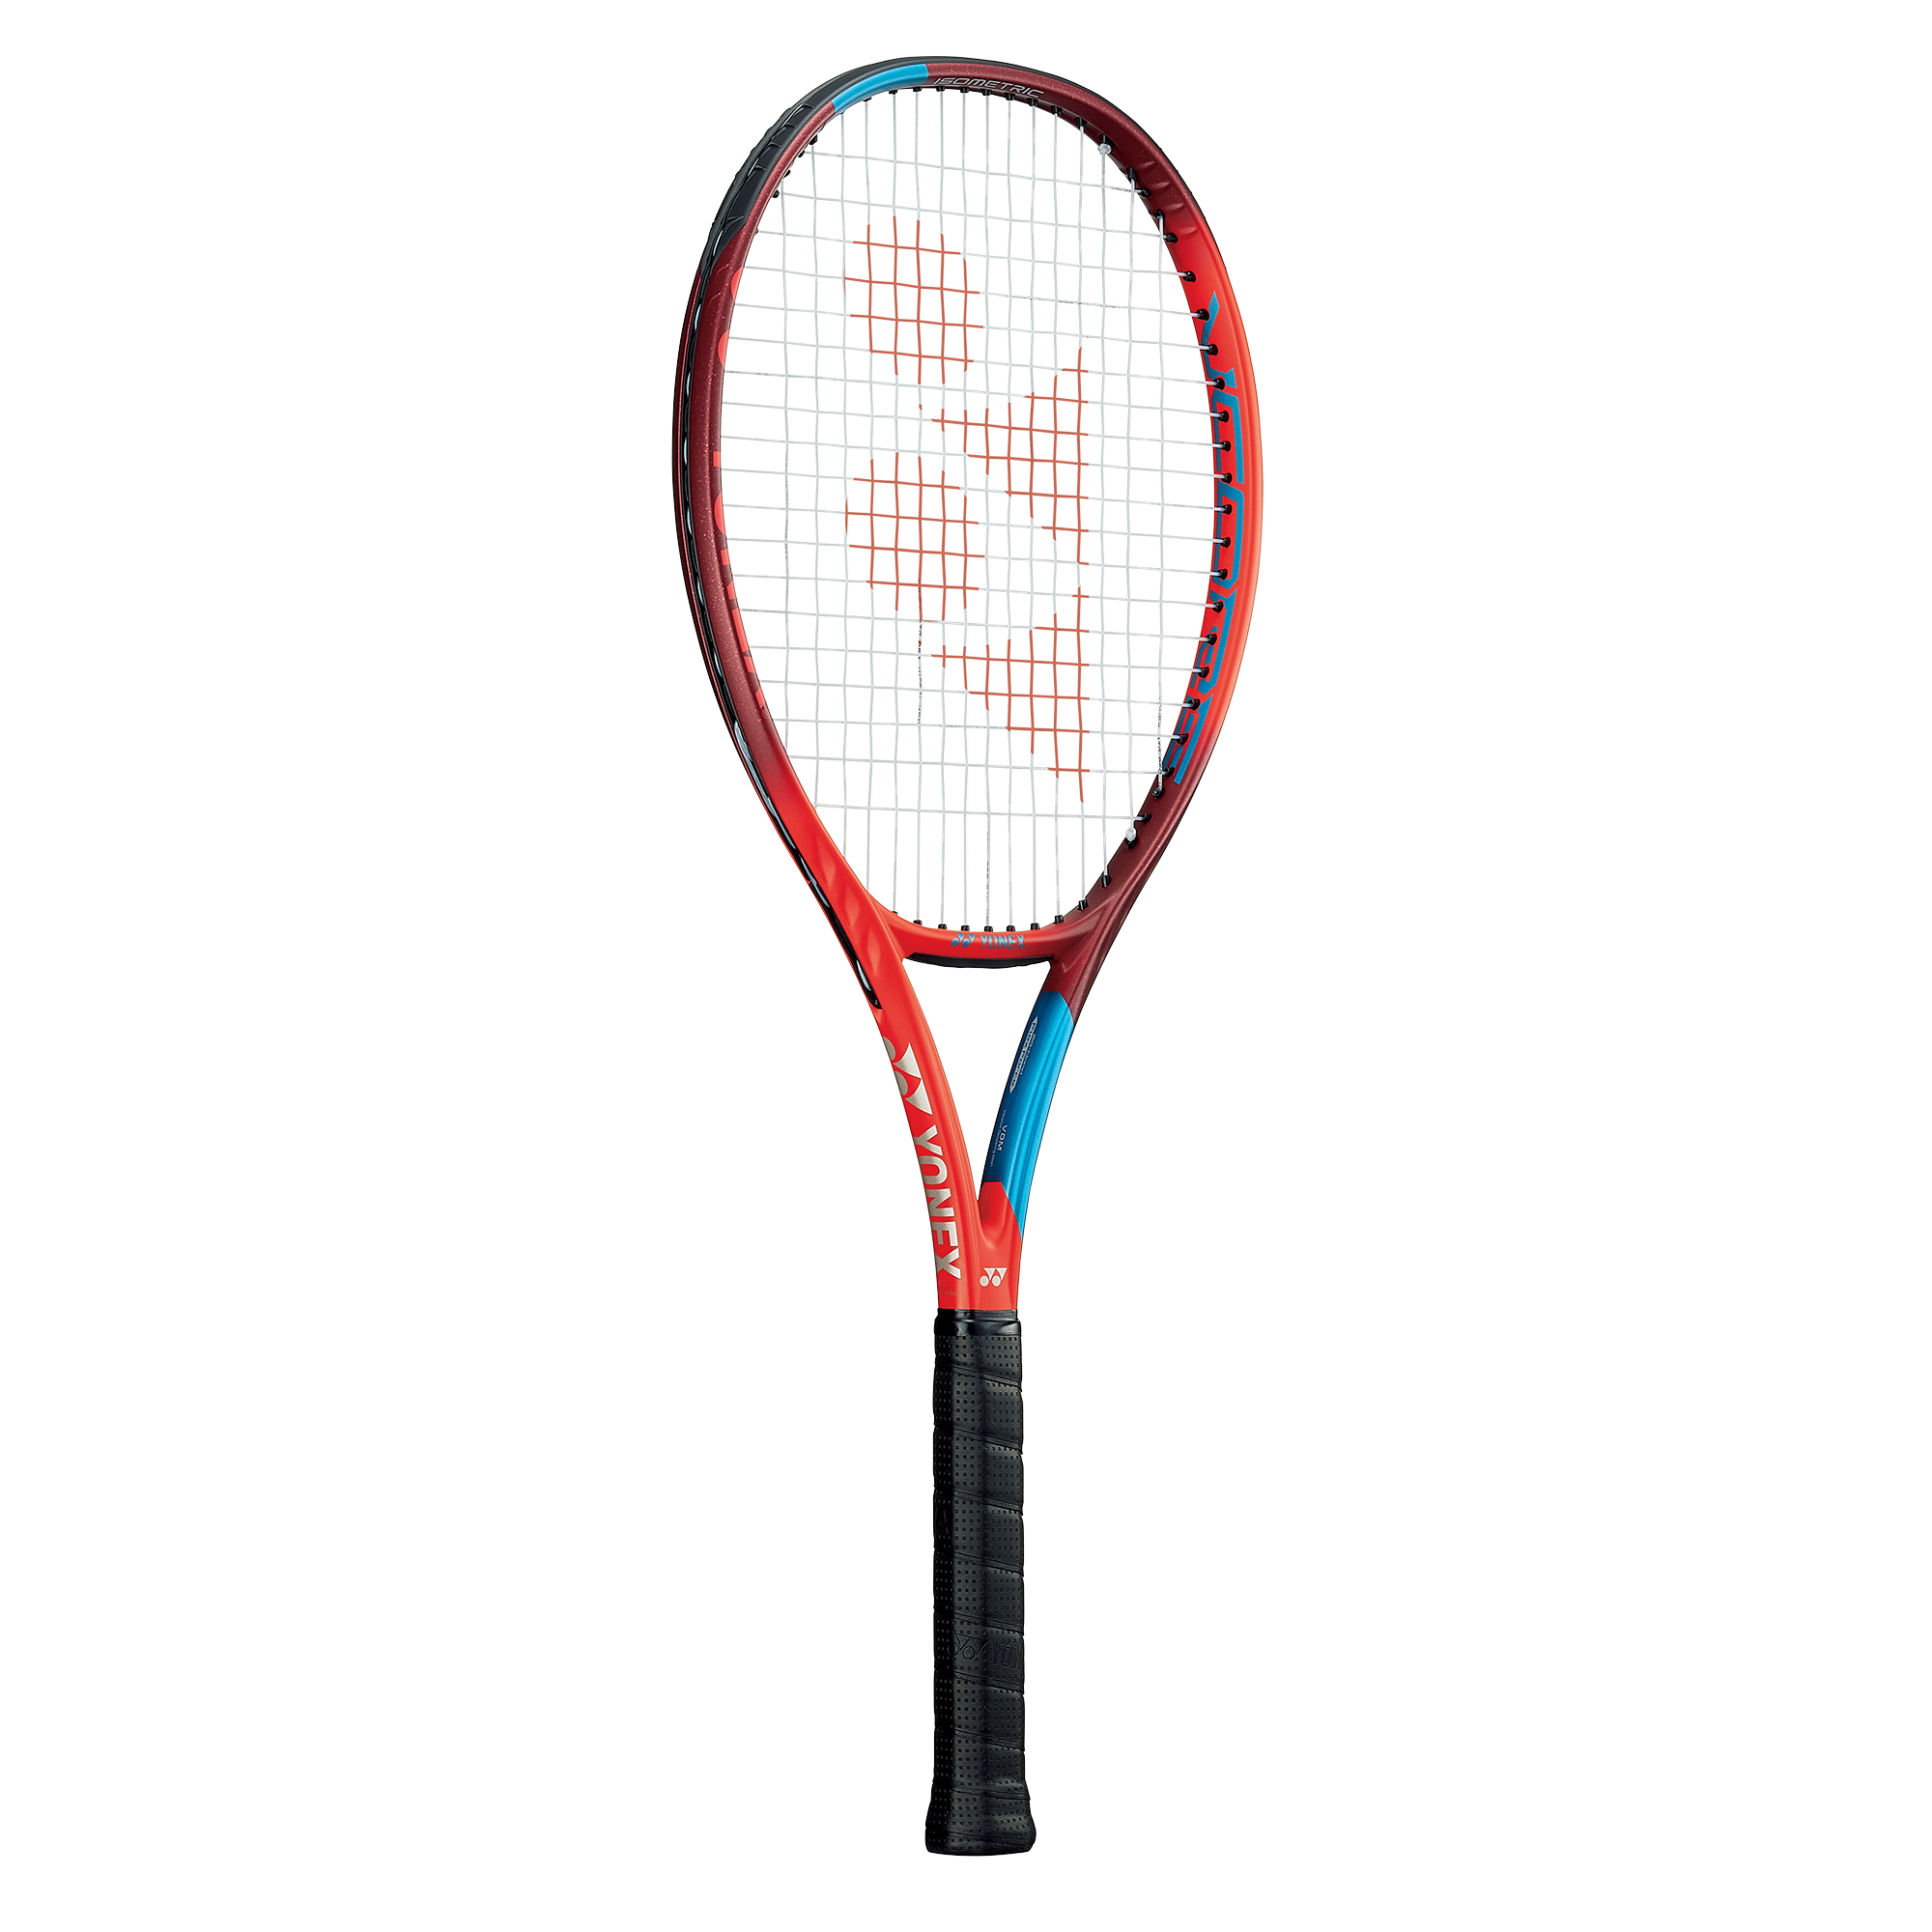 VCORE 100 2021 Tennis Racquet